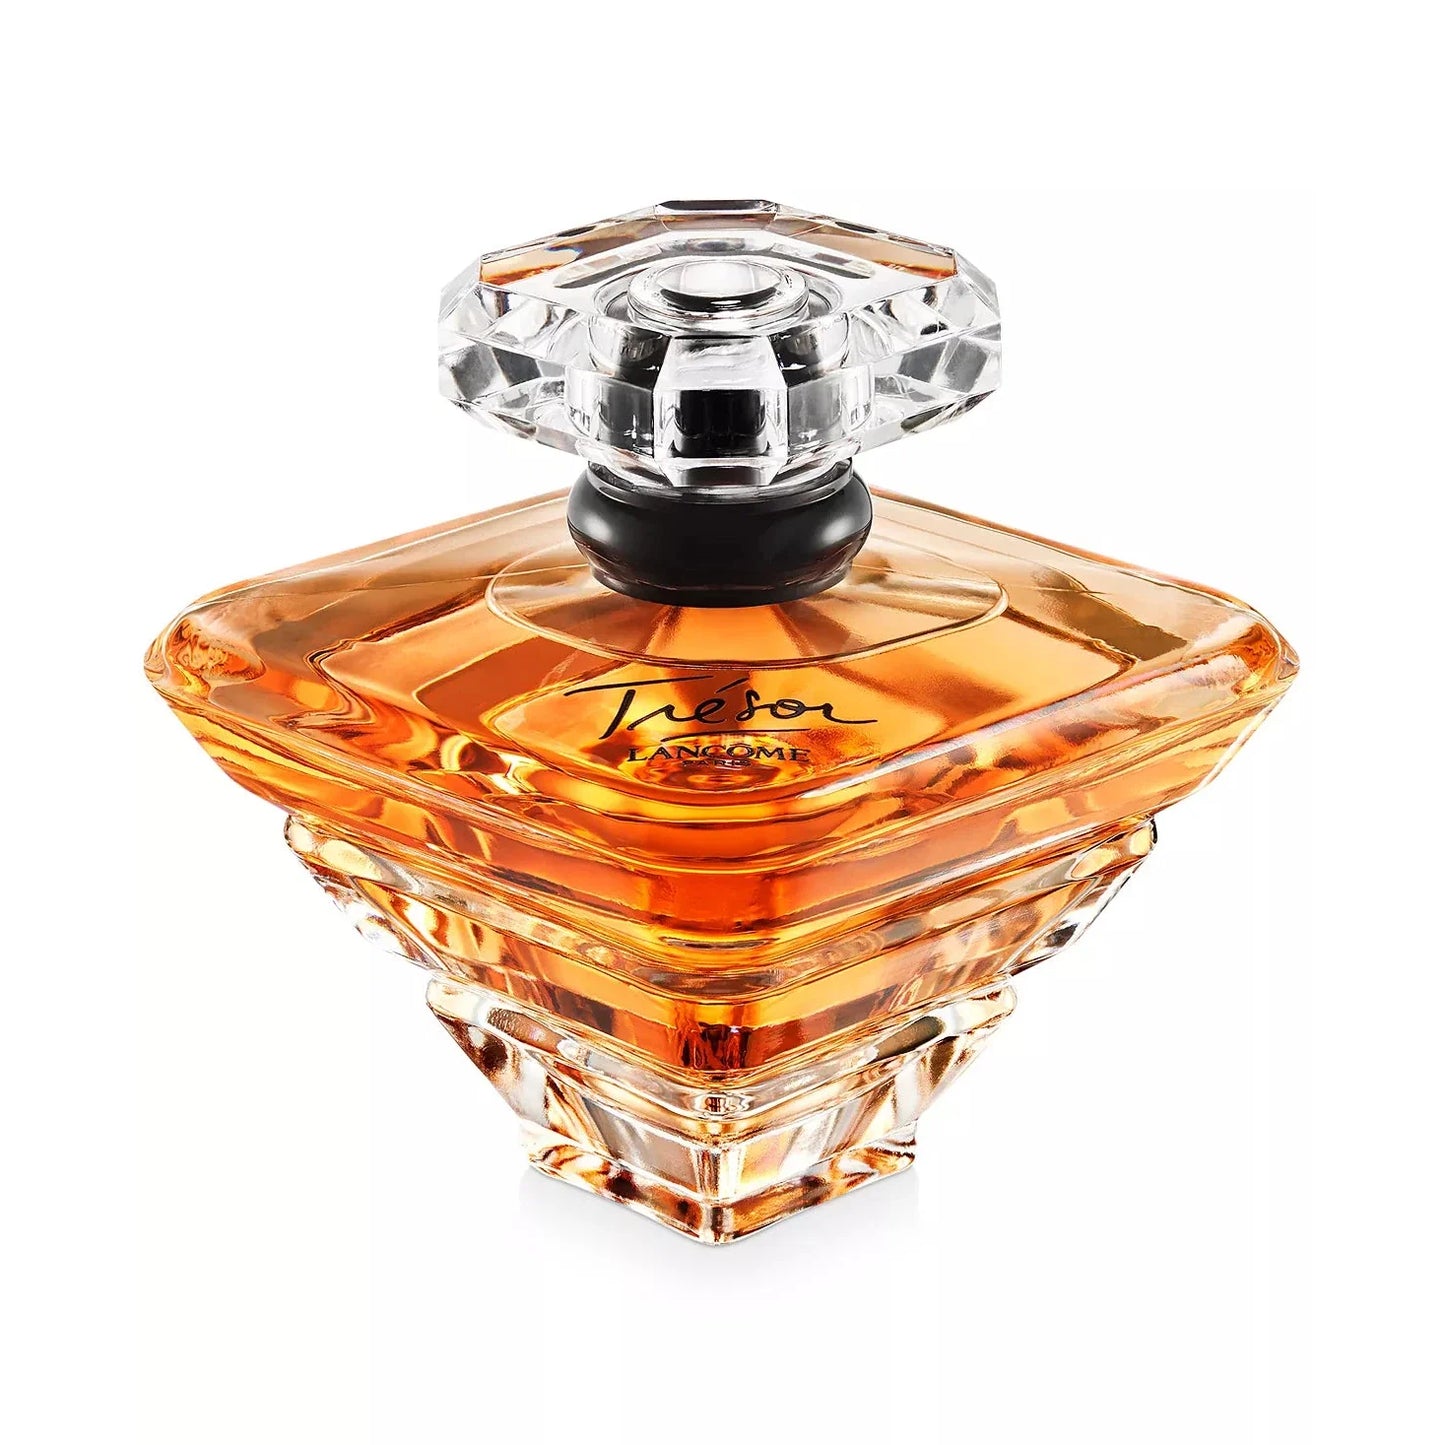 LANCOME - Tresor Eau de Parfum, 3.4 oz